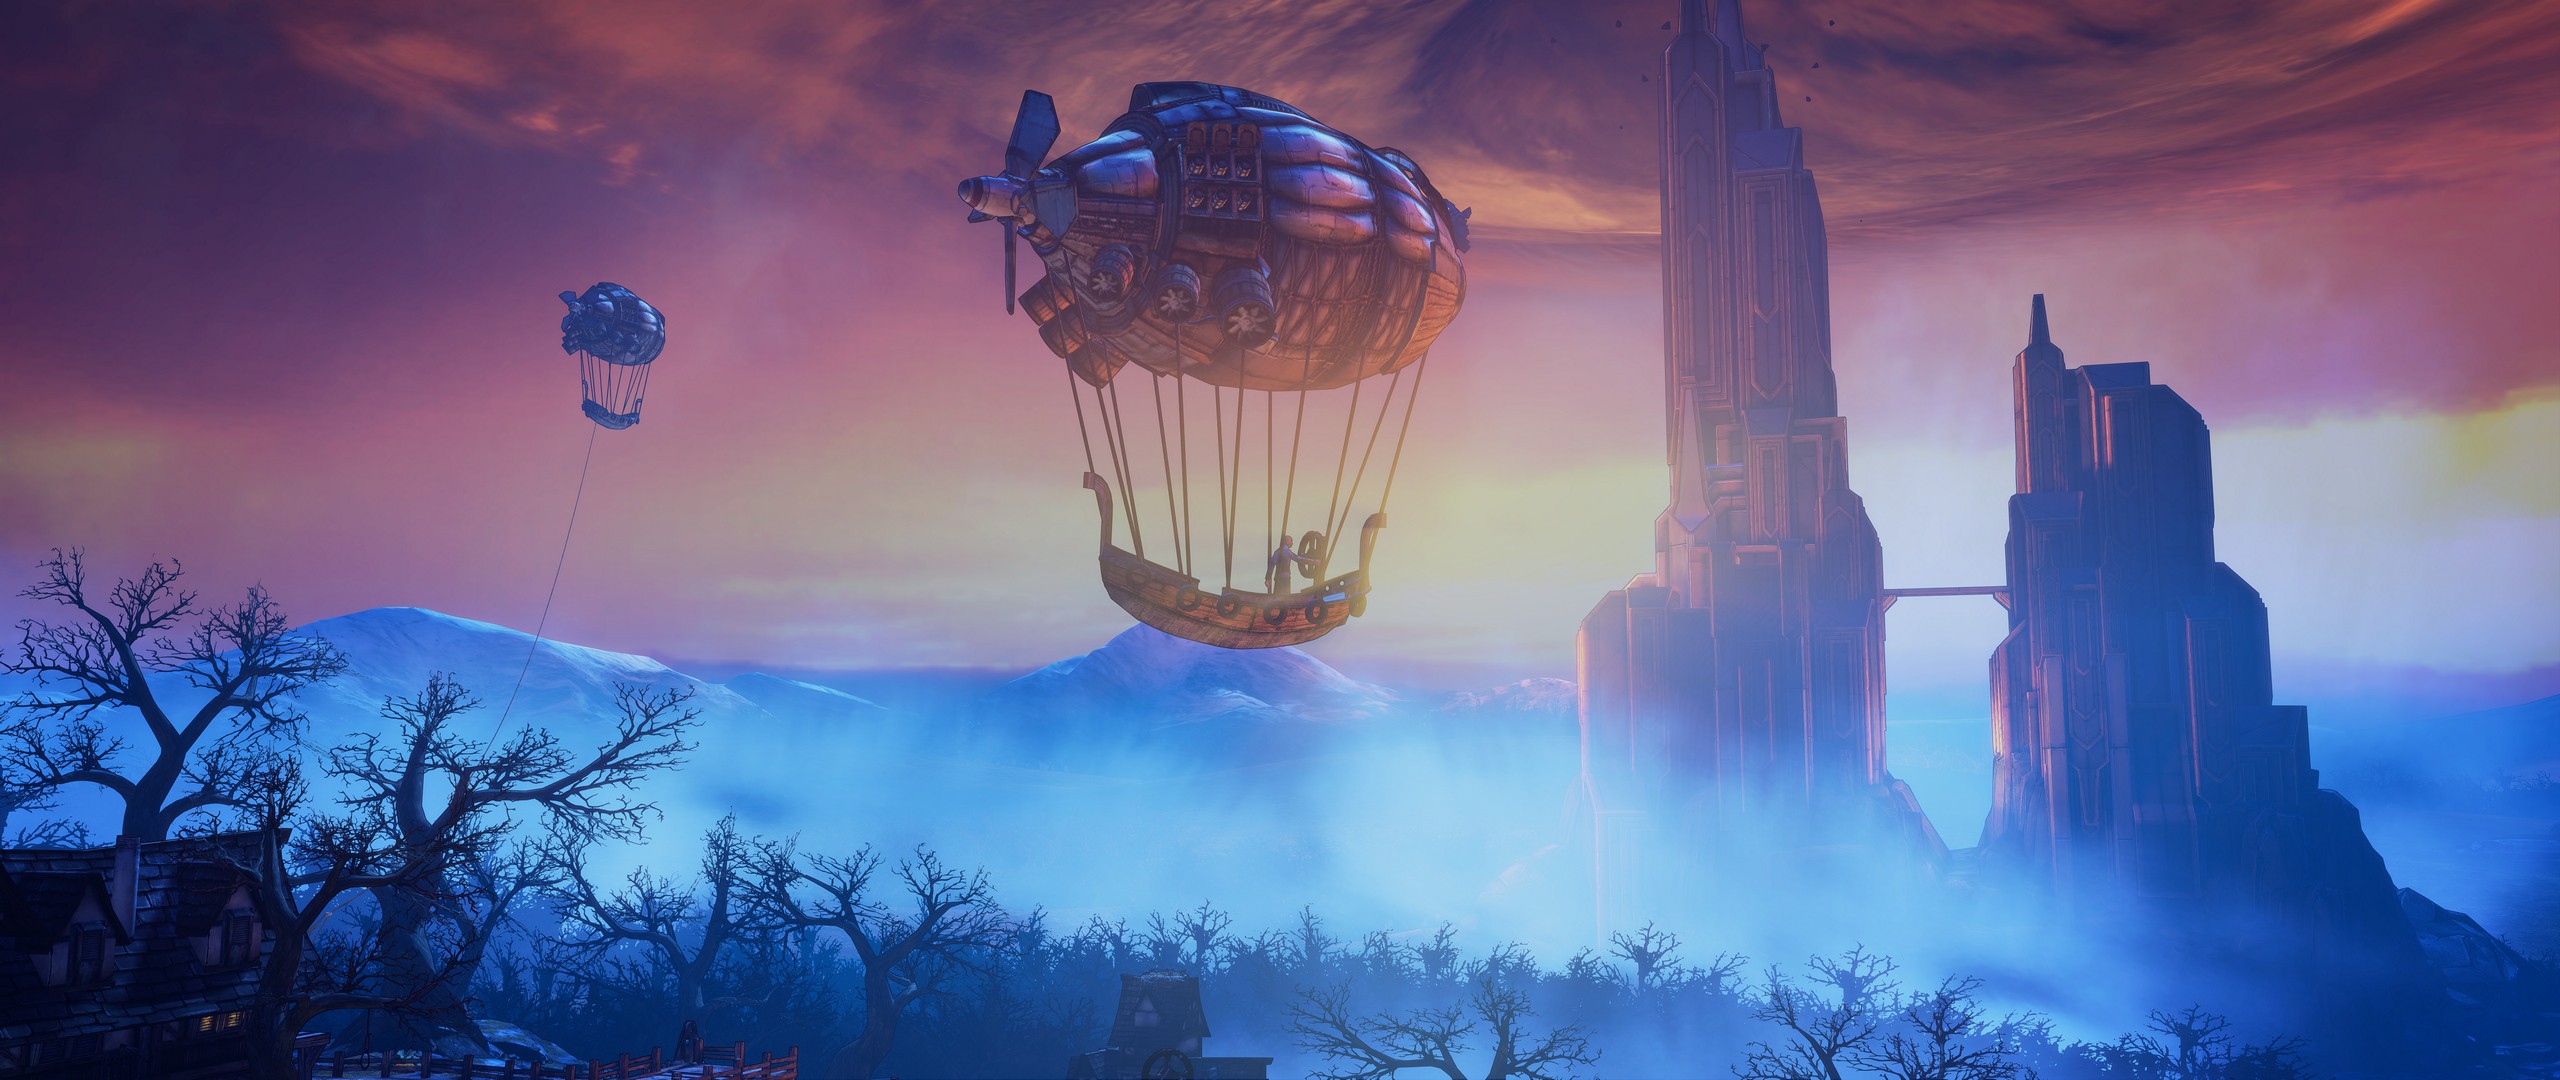 General 2560x1080 video games vehicle sky fantasy art airships